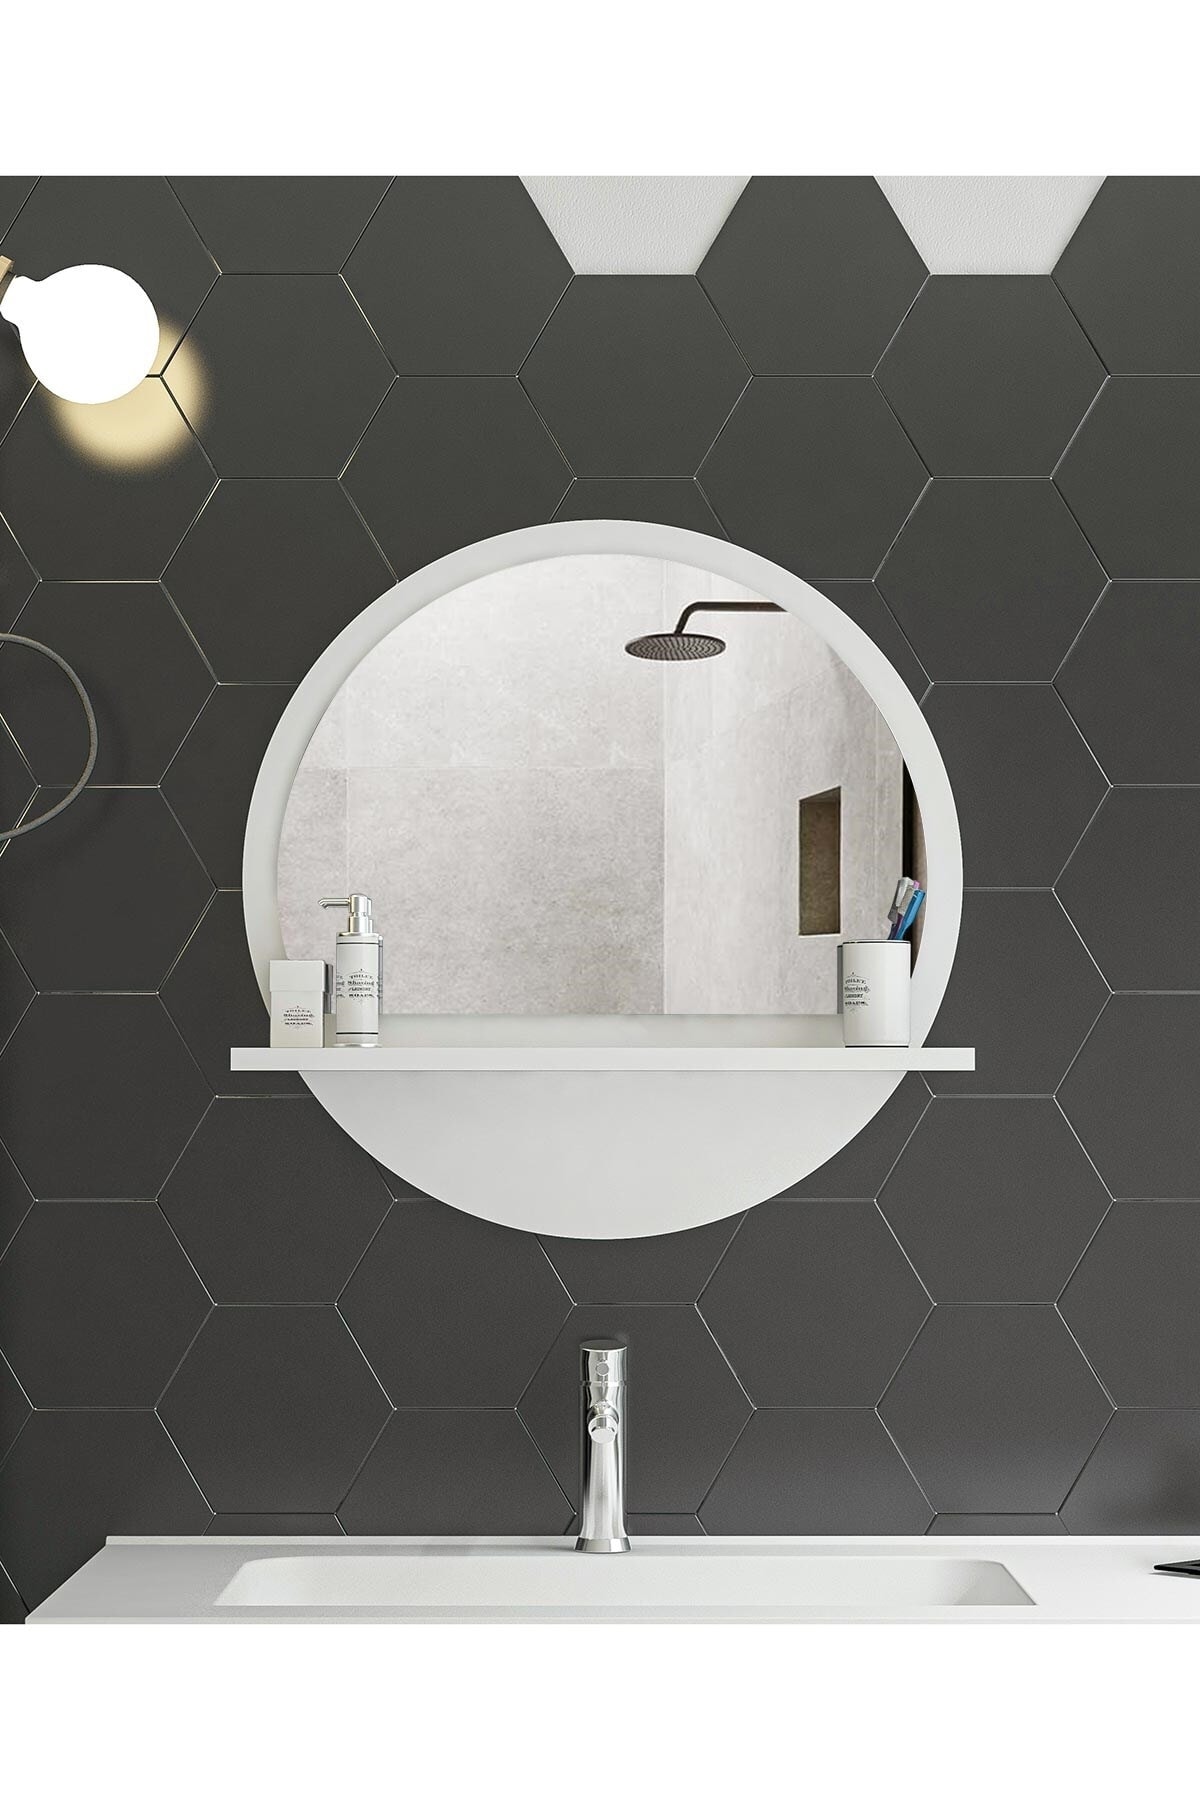 Resmo Sidney Beyaz Ayna Koridor Dresuar Konsol Duvar Salon Mutfak Banyo Ofis Çocuk Yatak Oda